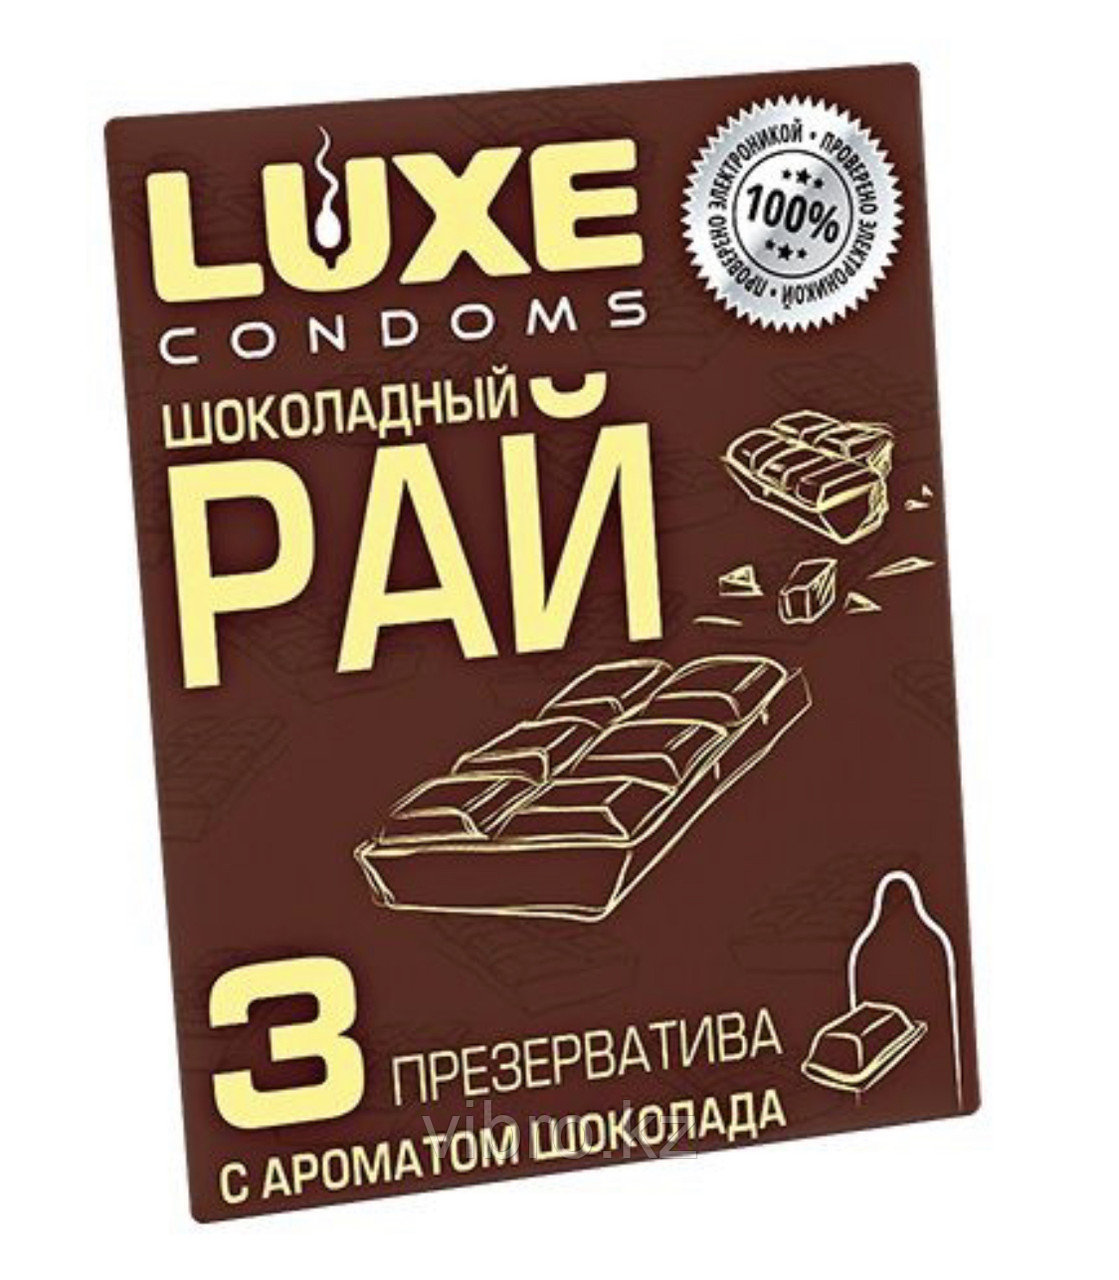 Презервативы LUXE с ароматом шоколада "Шоколадный Рай". 3шт